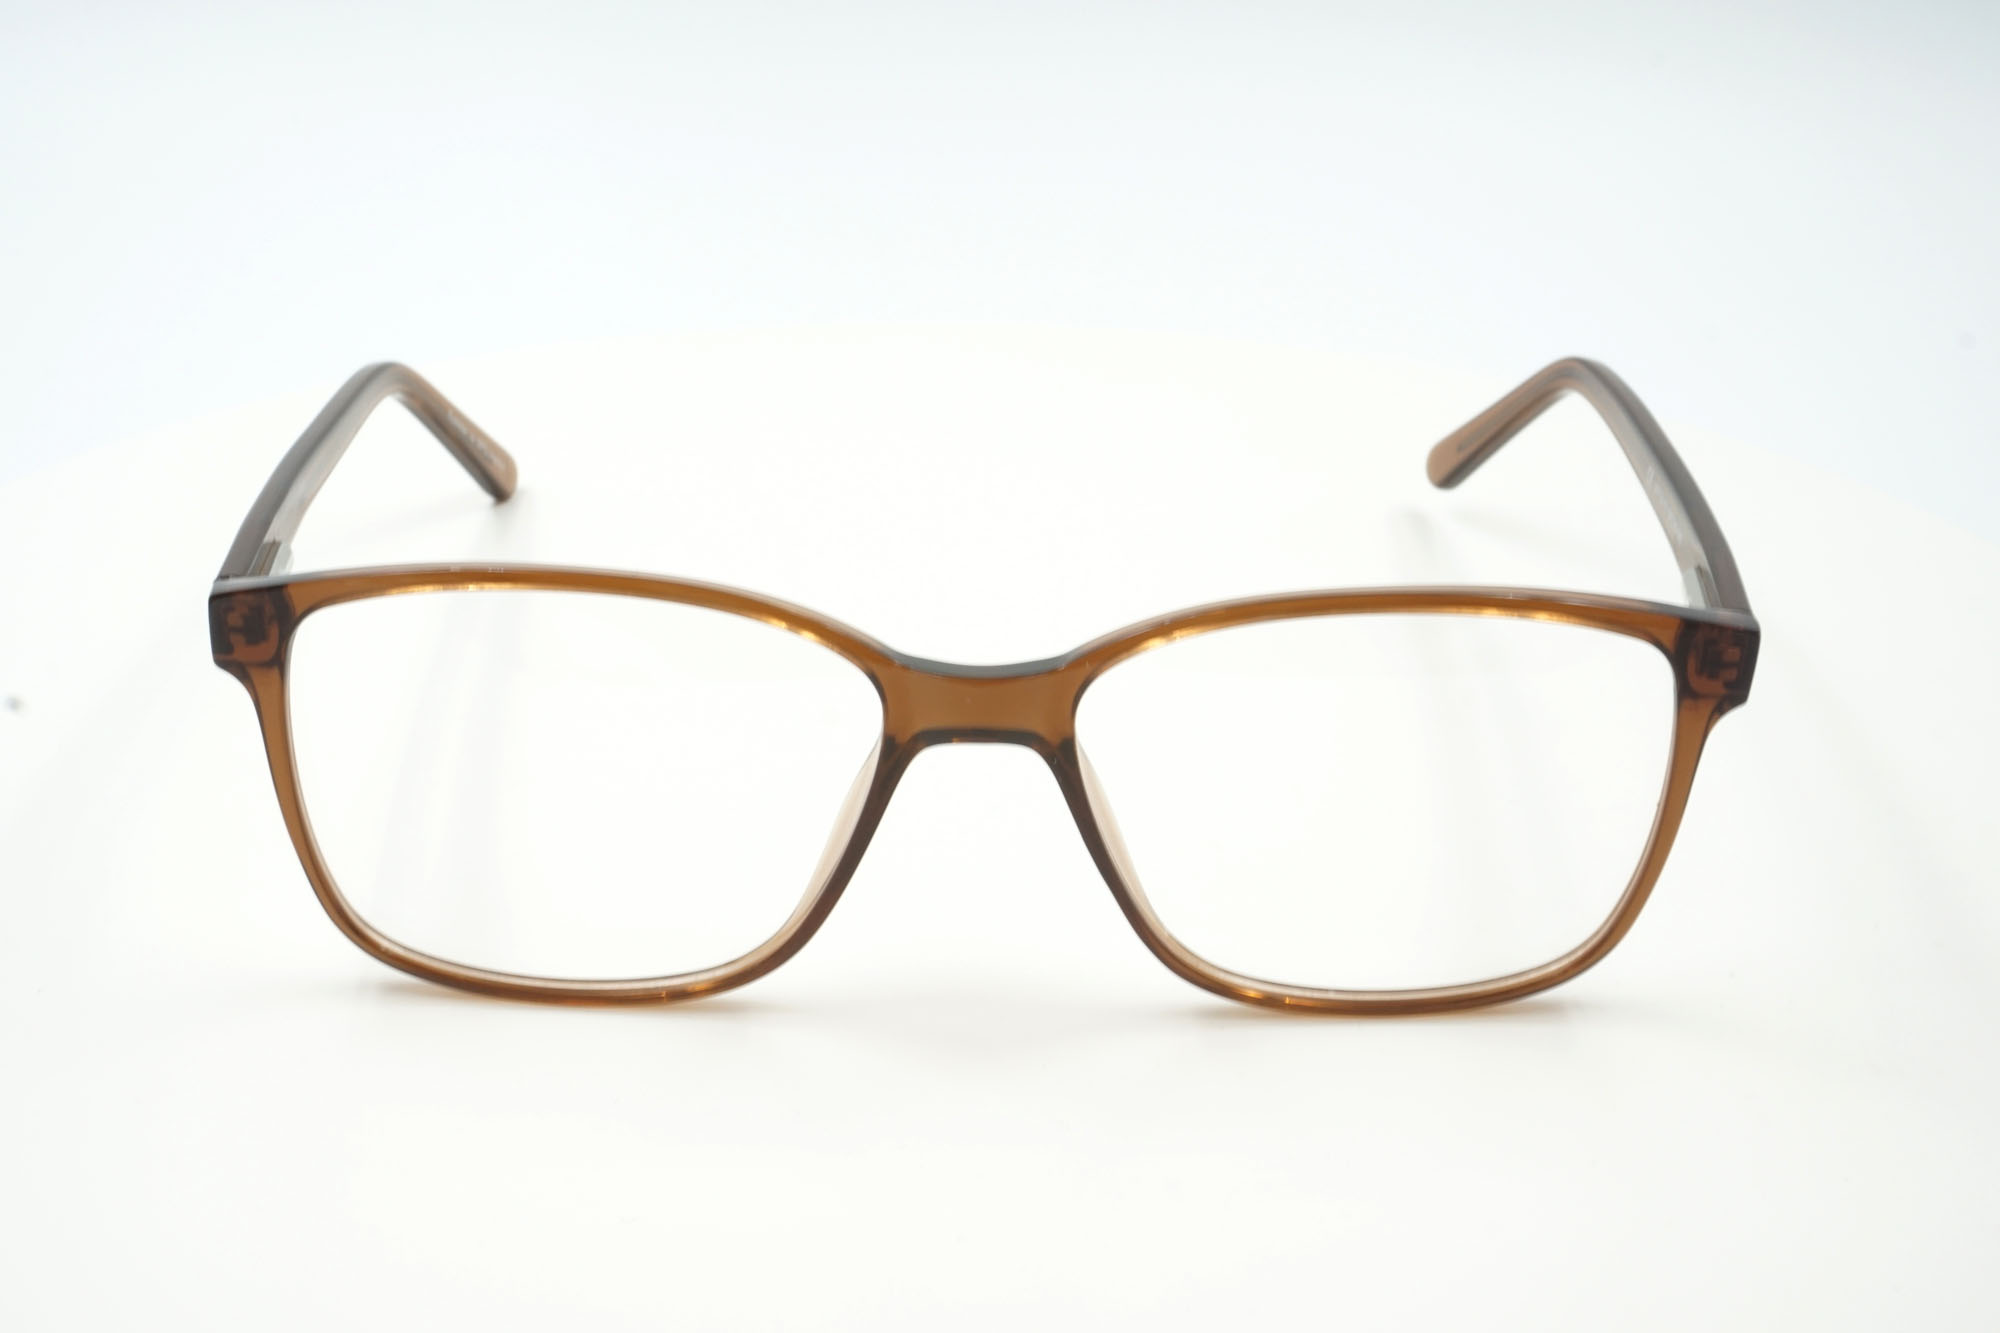 Kunststoffbrille Georg braun